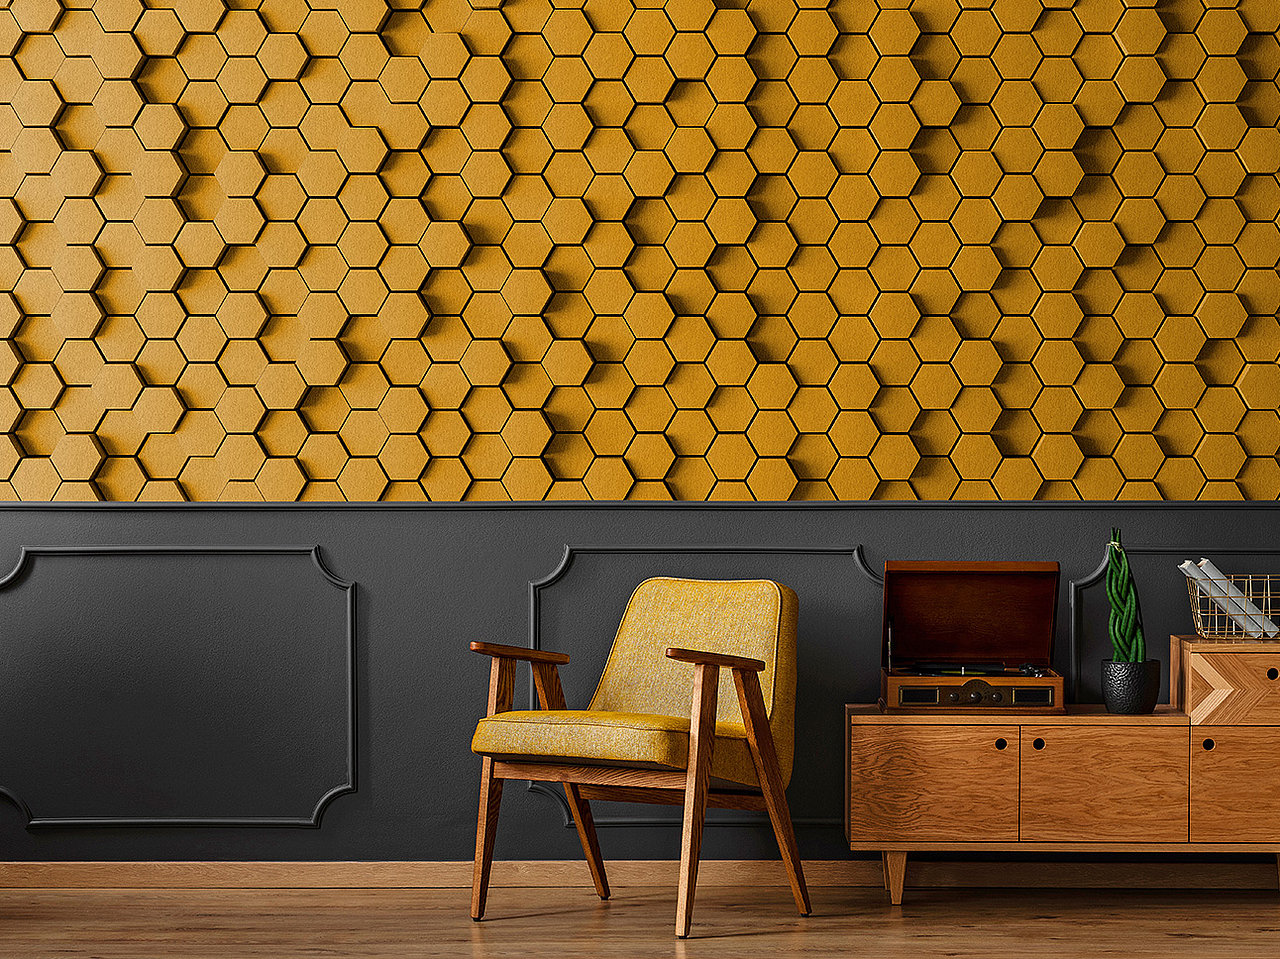 Honeycomb 1 – 3D Fototapete mit gelbem Wabendesign